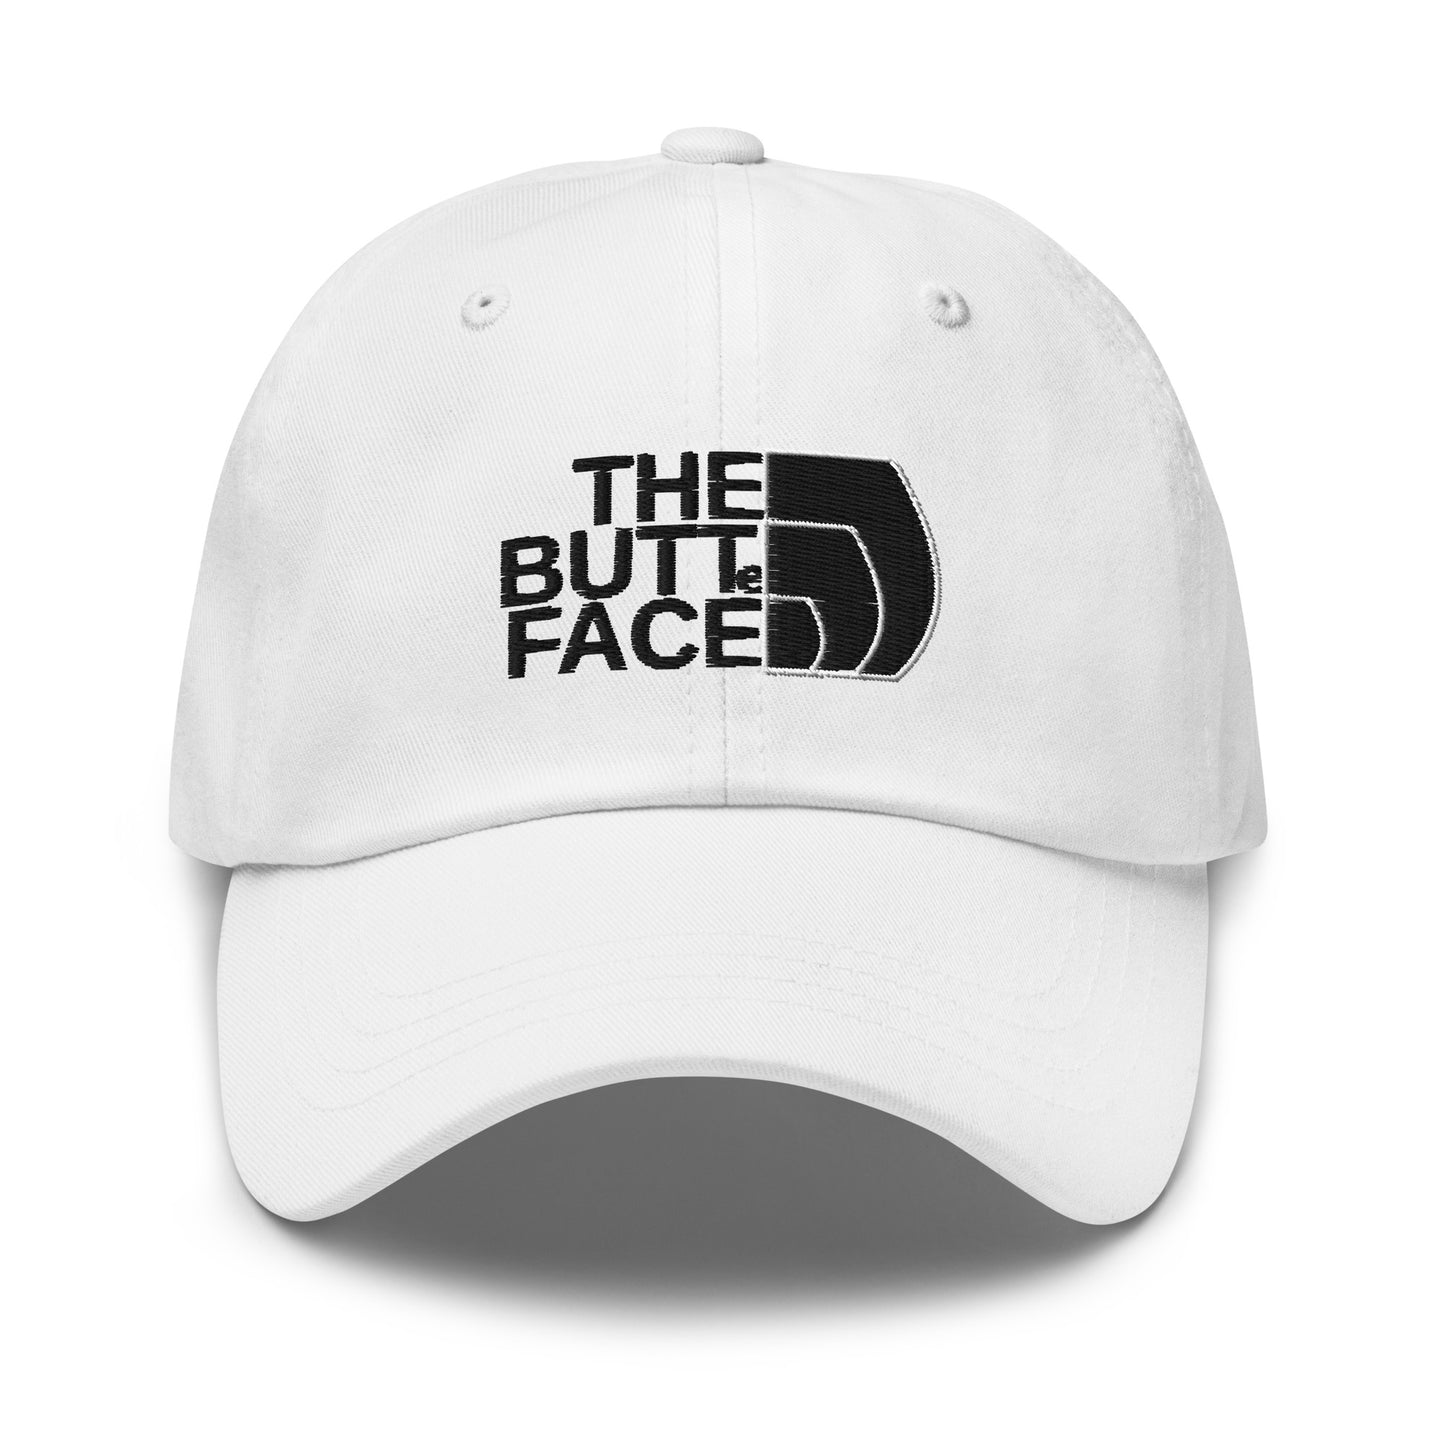 TBF baseball cap